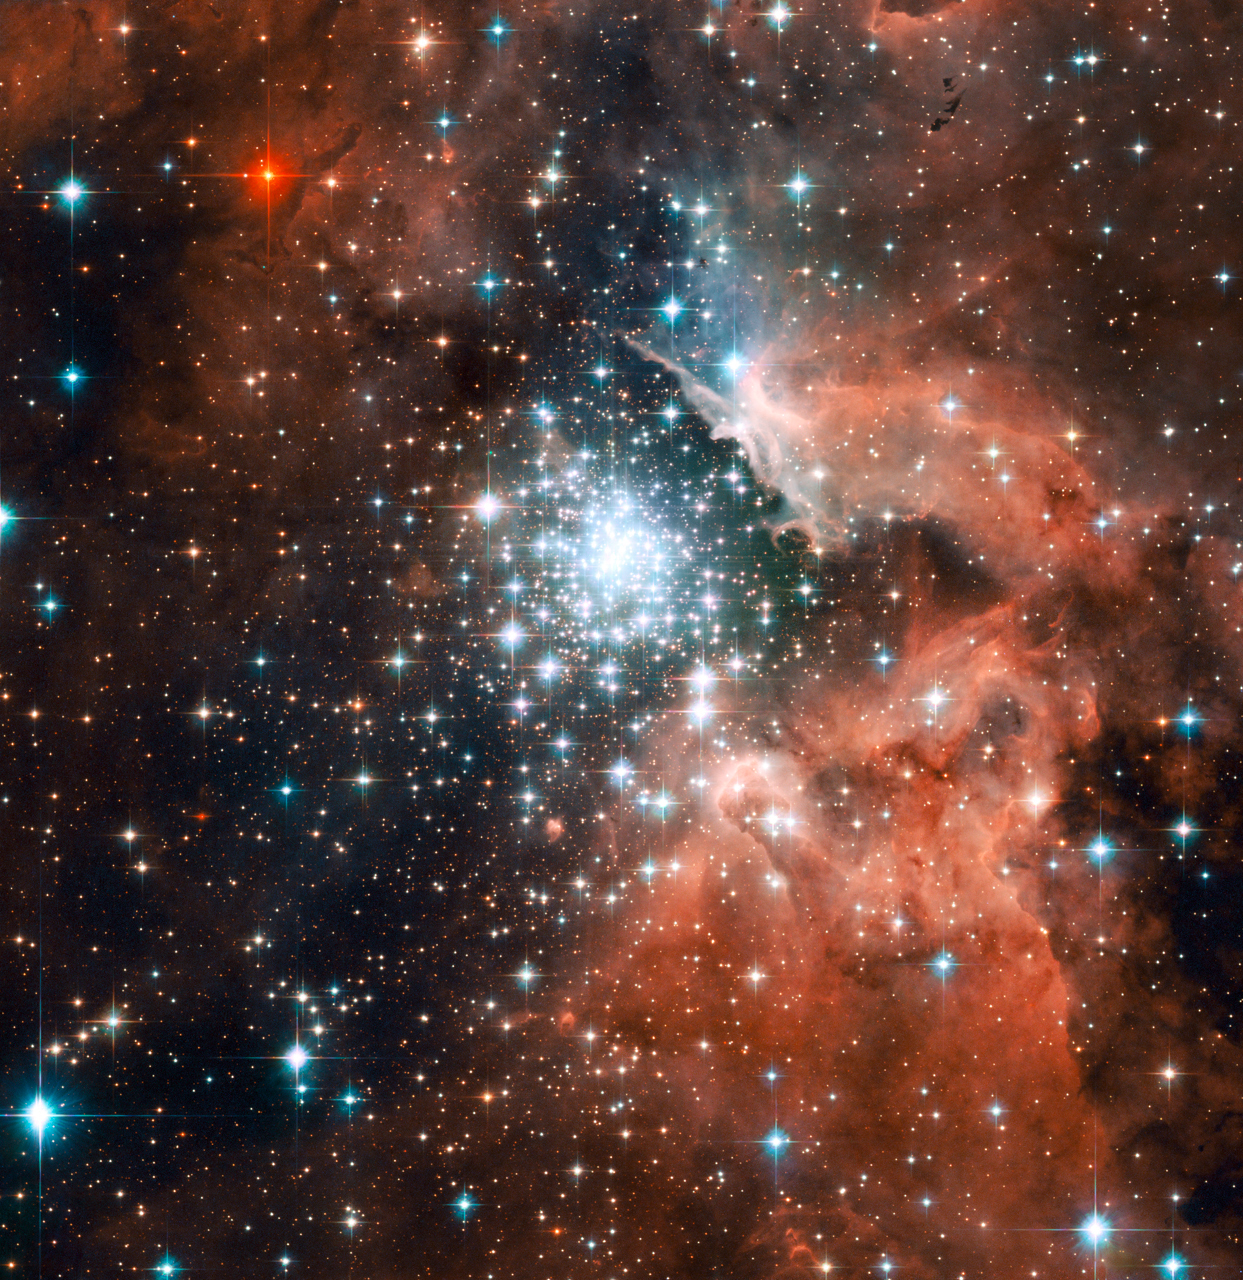 Starburst Cluster in NGC 3603